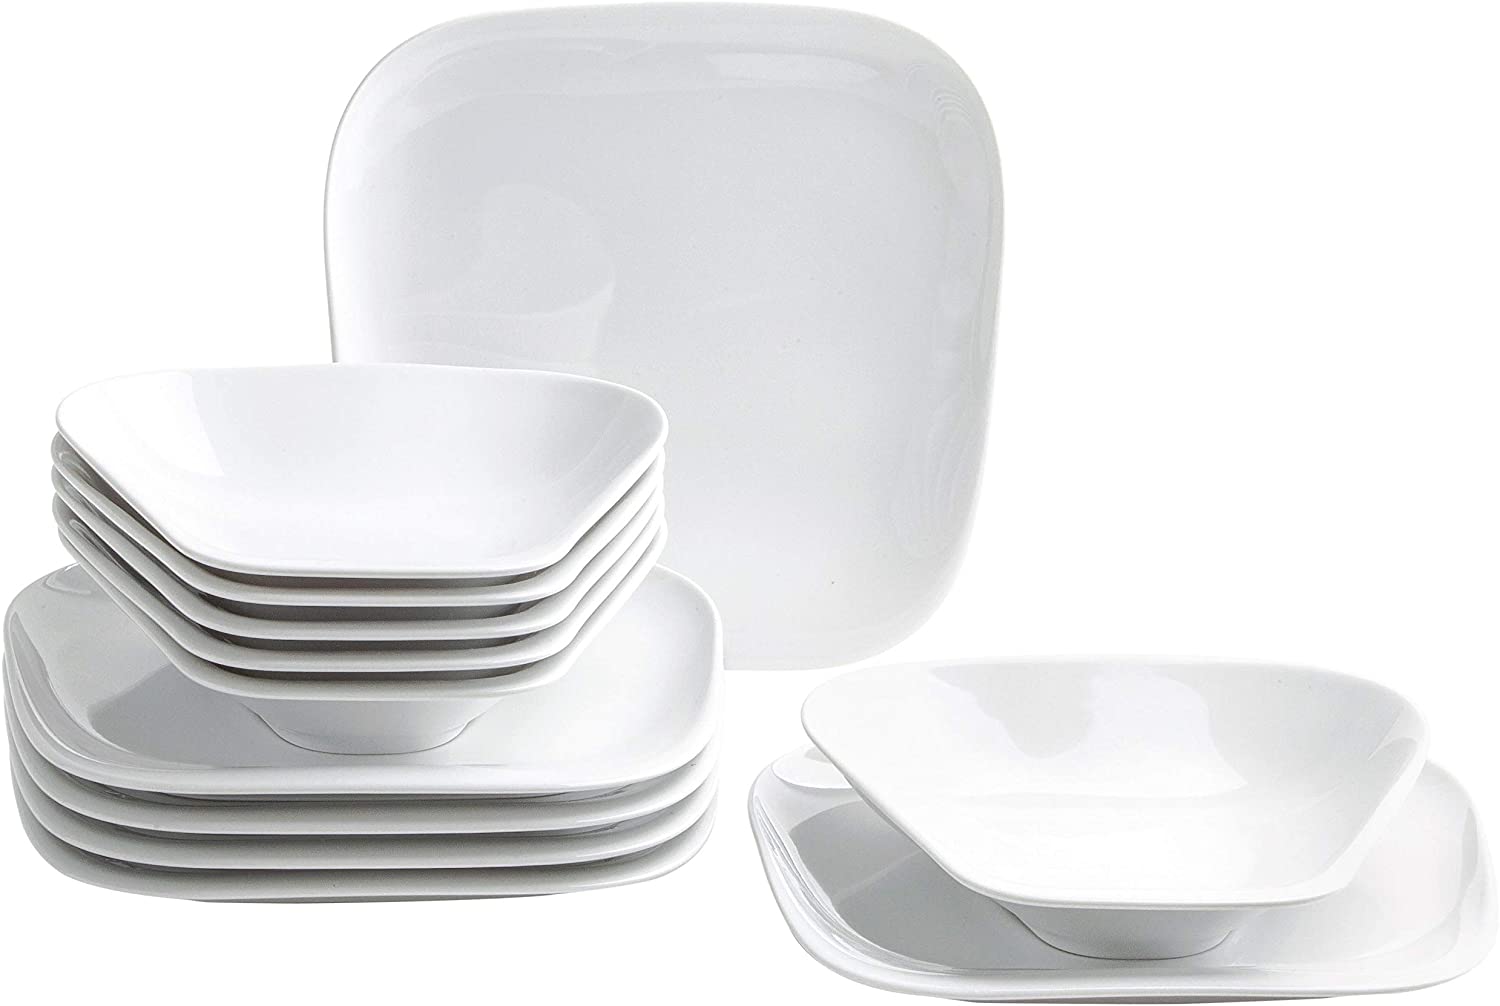 Kahla Elixyr 150222A90015C Porcelain Dinner Set for 6 People White Square Modern 12-Piece Plate Soup Plate Dinner Service Dinnerware